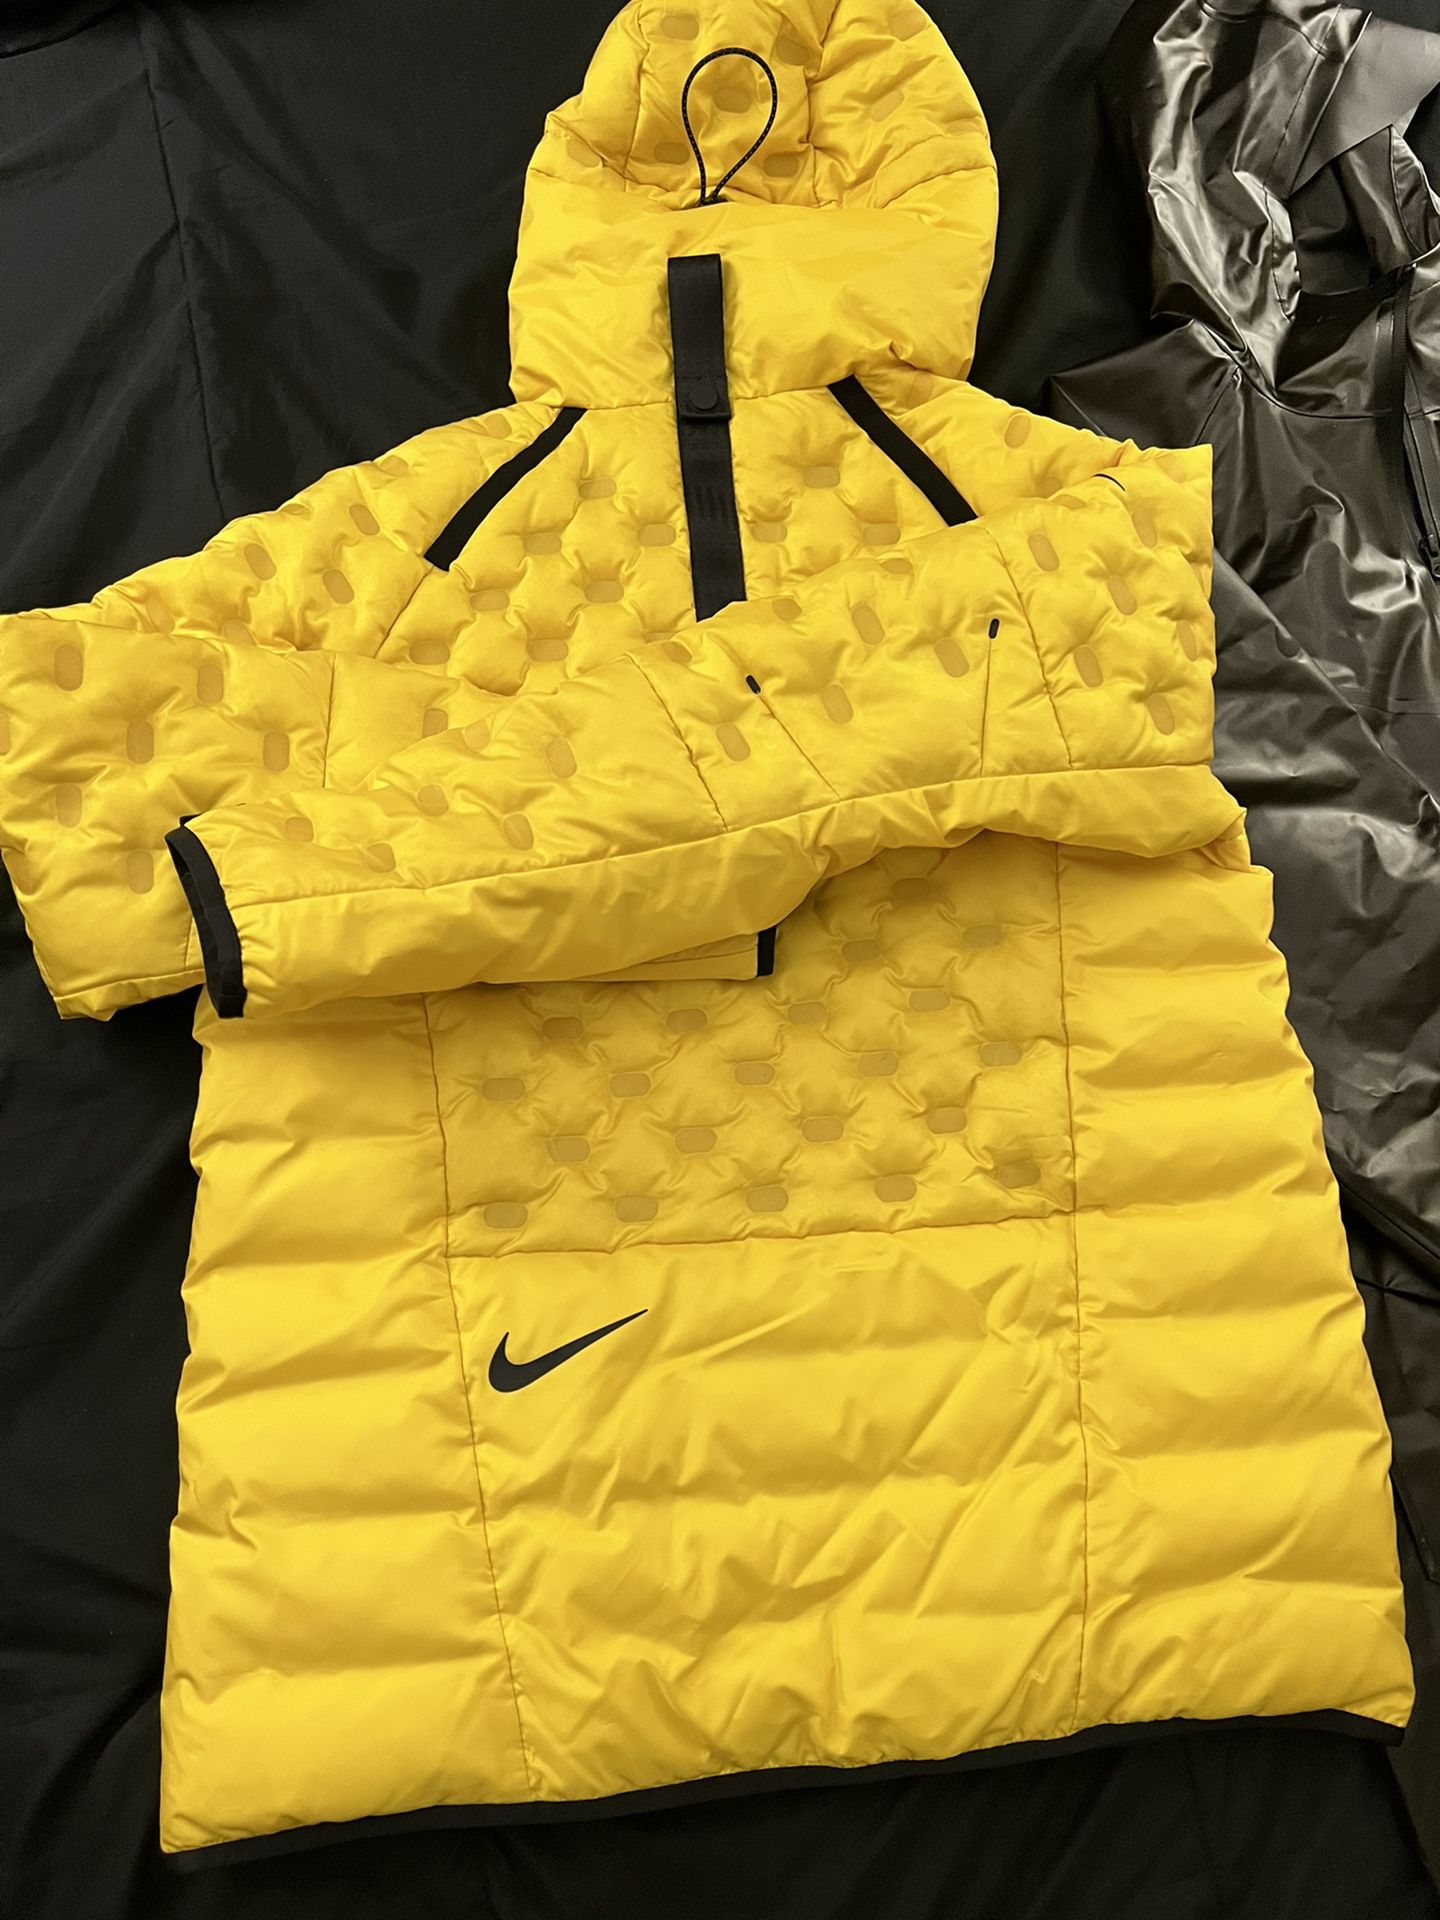 Nike Yellow Jacket W/ Rain Coat Combo for Sale in Garden Grove, CA OfferUp